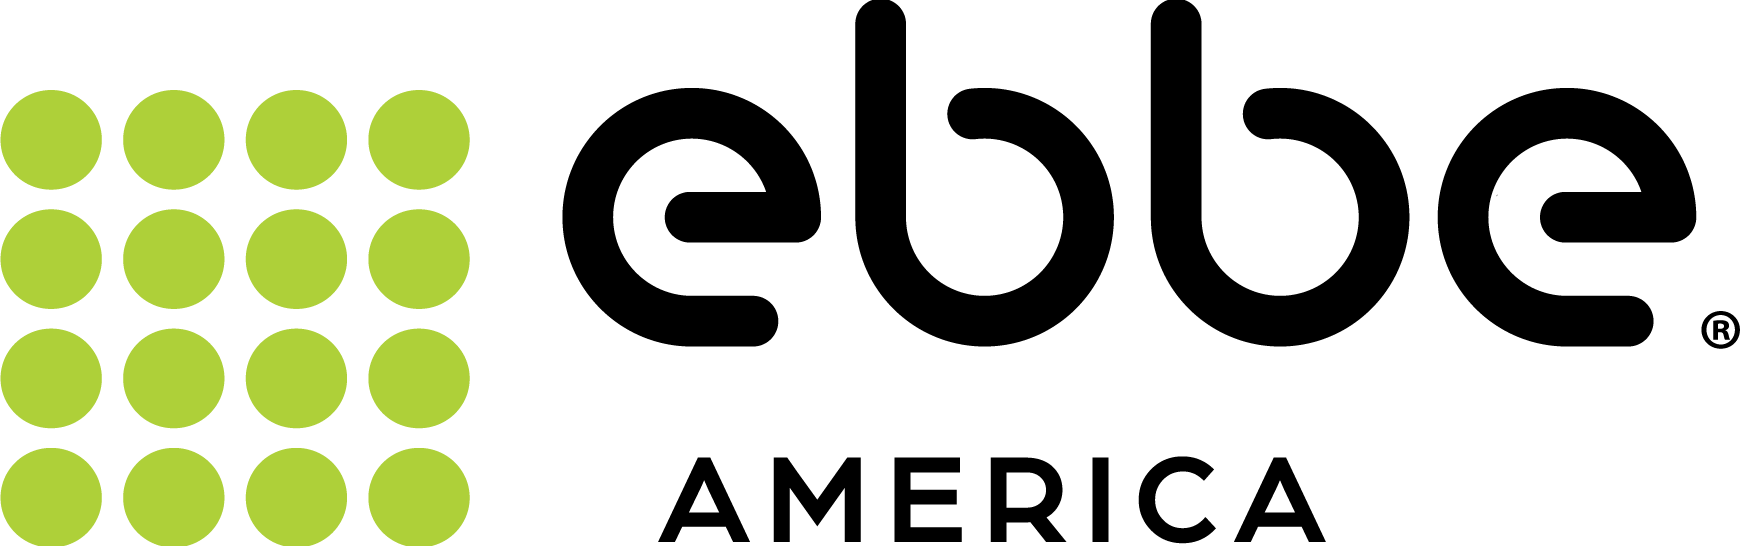 Ebbe New Logo Horizontal - Green Dots - Black Text - White Background - PNG